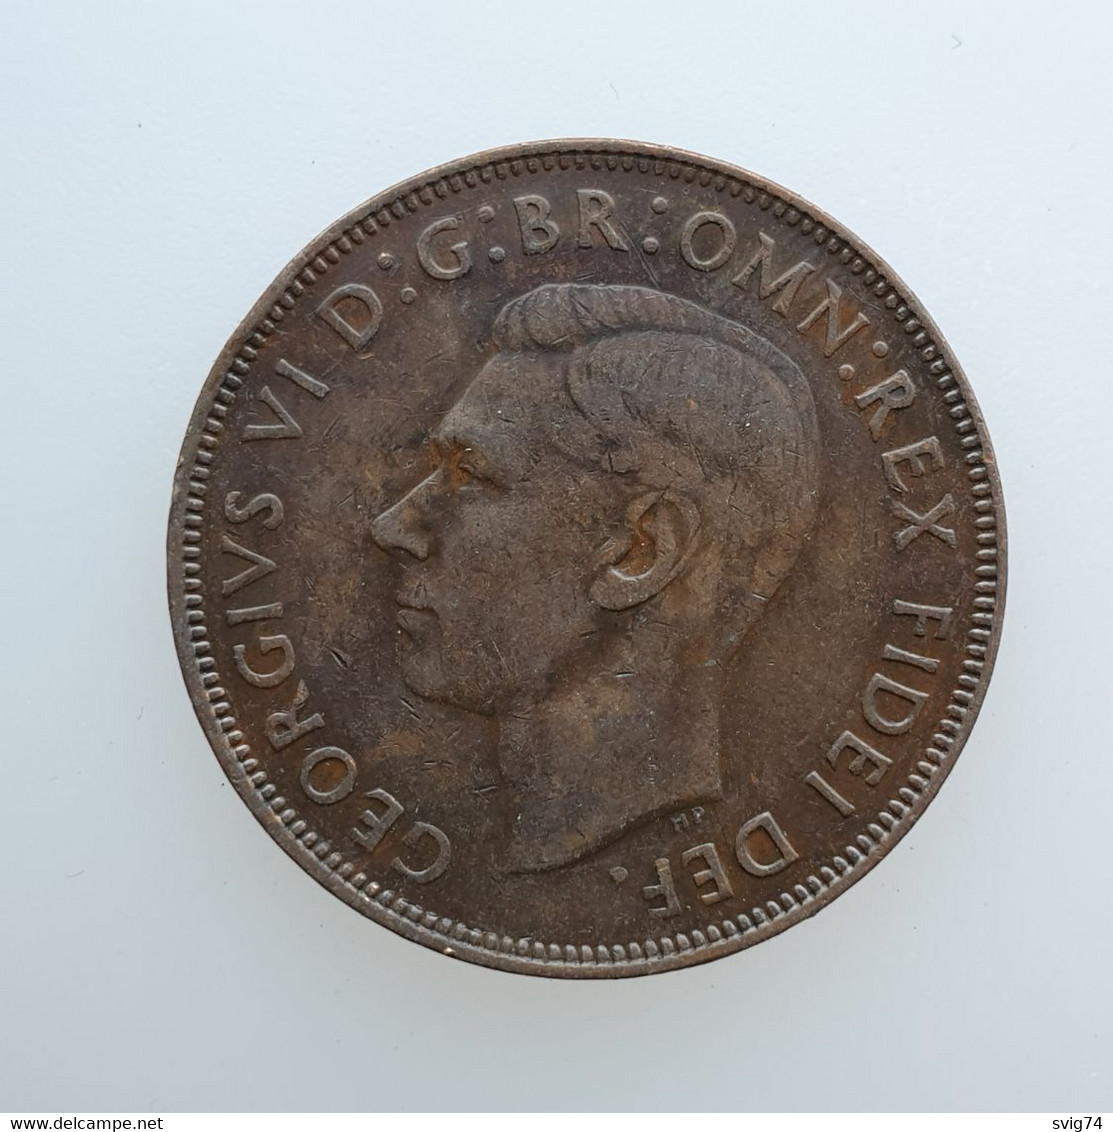 Australia - George VI - 1950 - 1 Penny - Penny